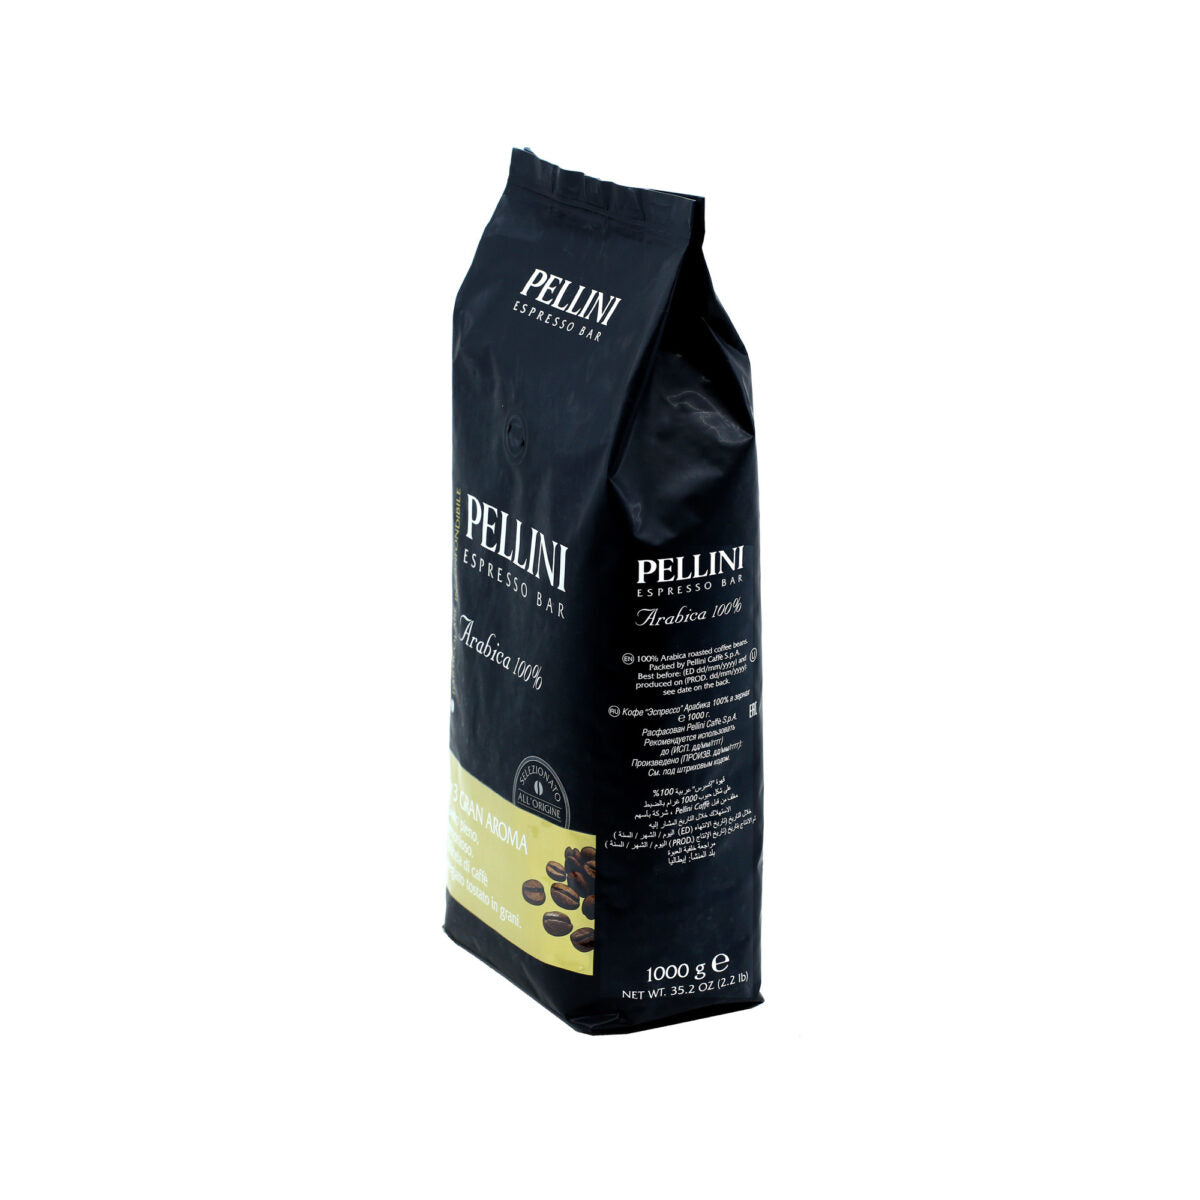 Pellini Gran Aroma 100% Arabica Coffee Beans 1kg 2,2lb - Aster Premium